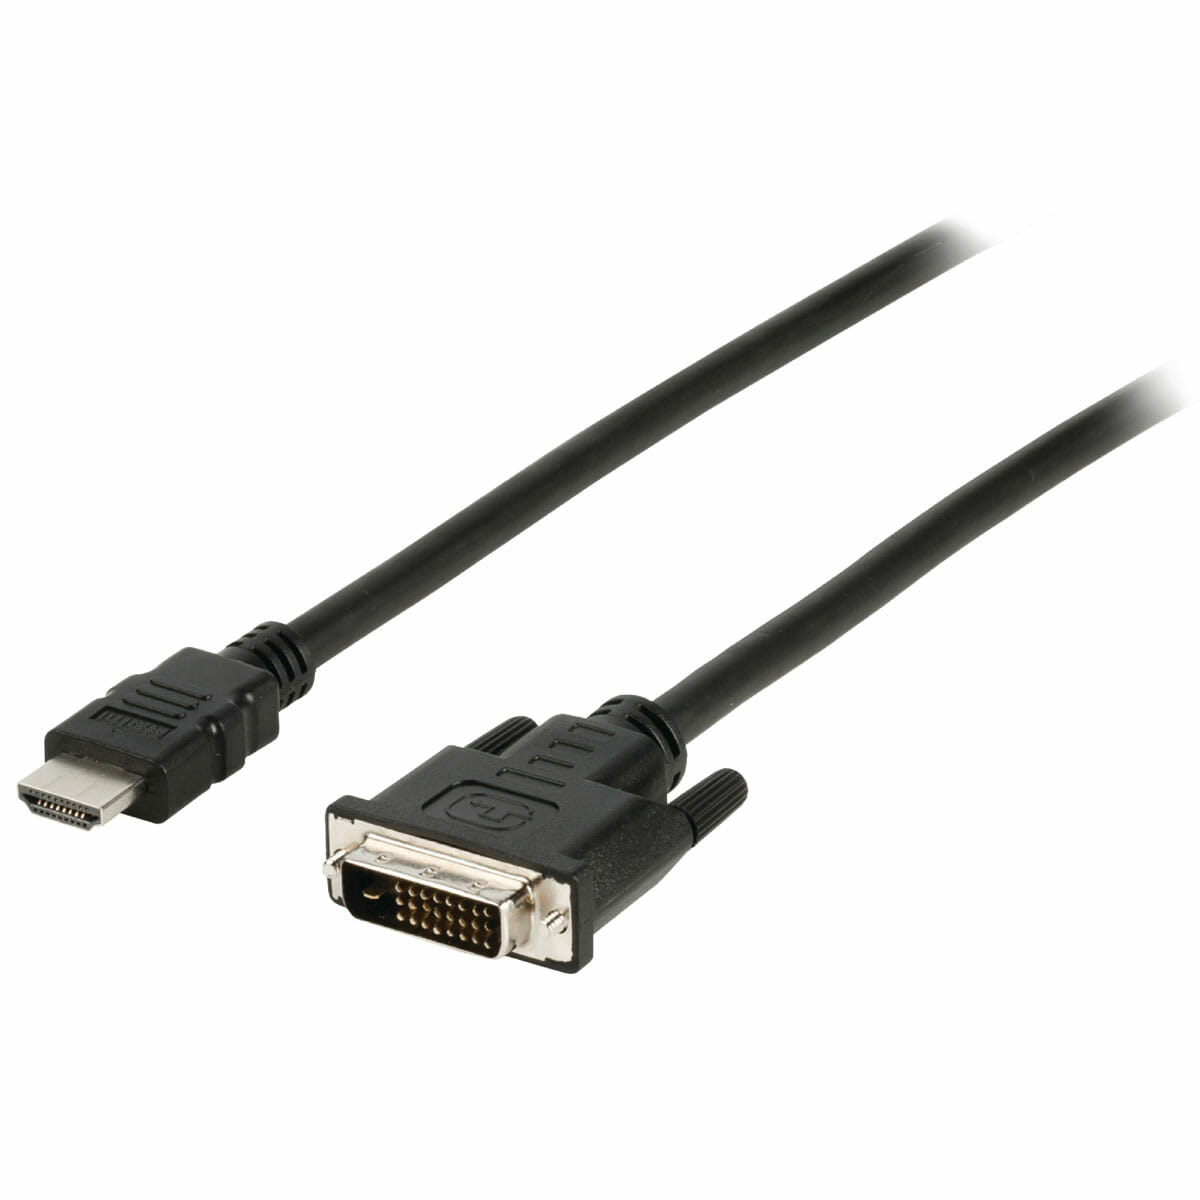 Single Link DVI Cables